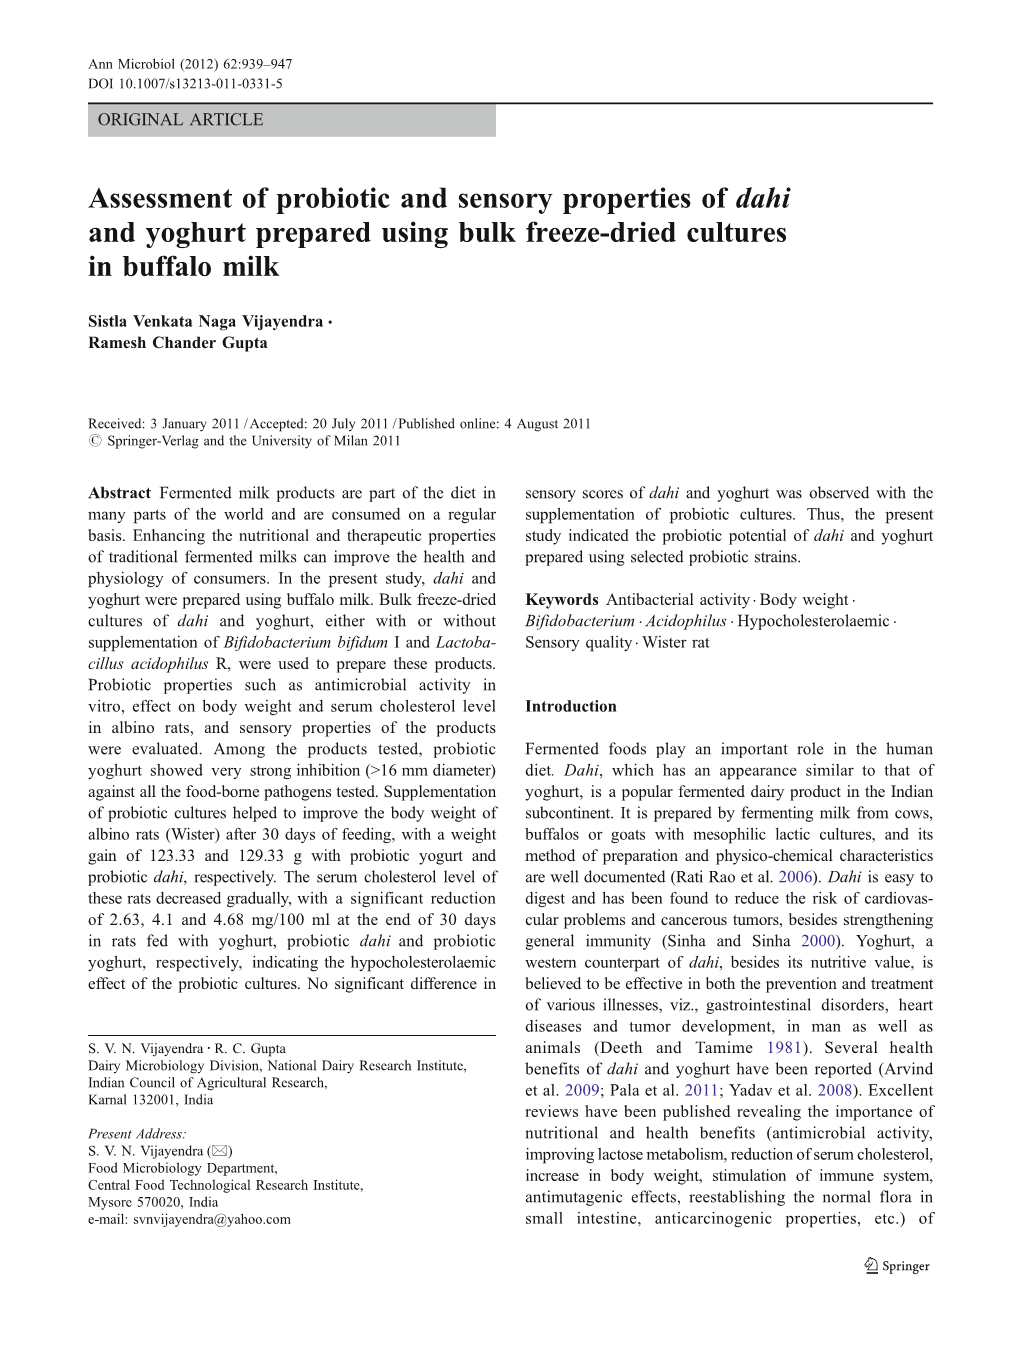 Assessment of Probiotic and Sensory Properties of Dahi and Yoghurt Prepared Using Bulk Freeze-Dried Cultures in Buffalo Milk